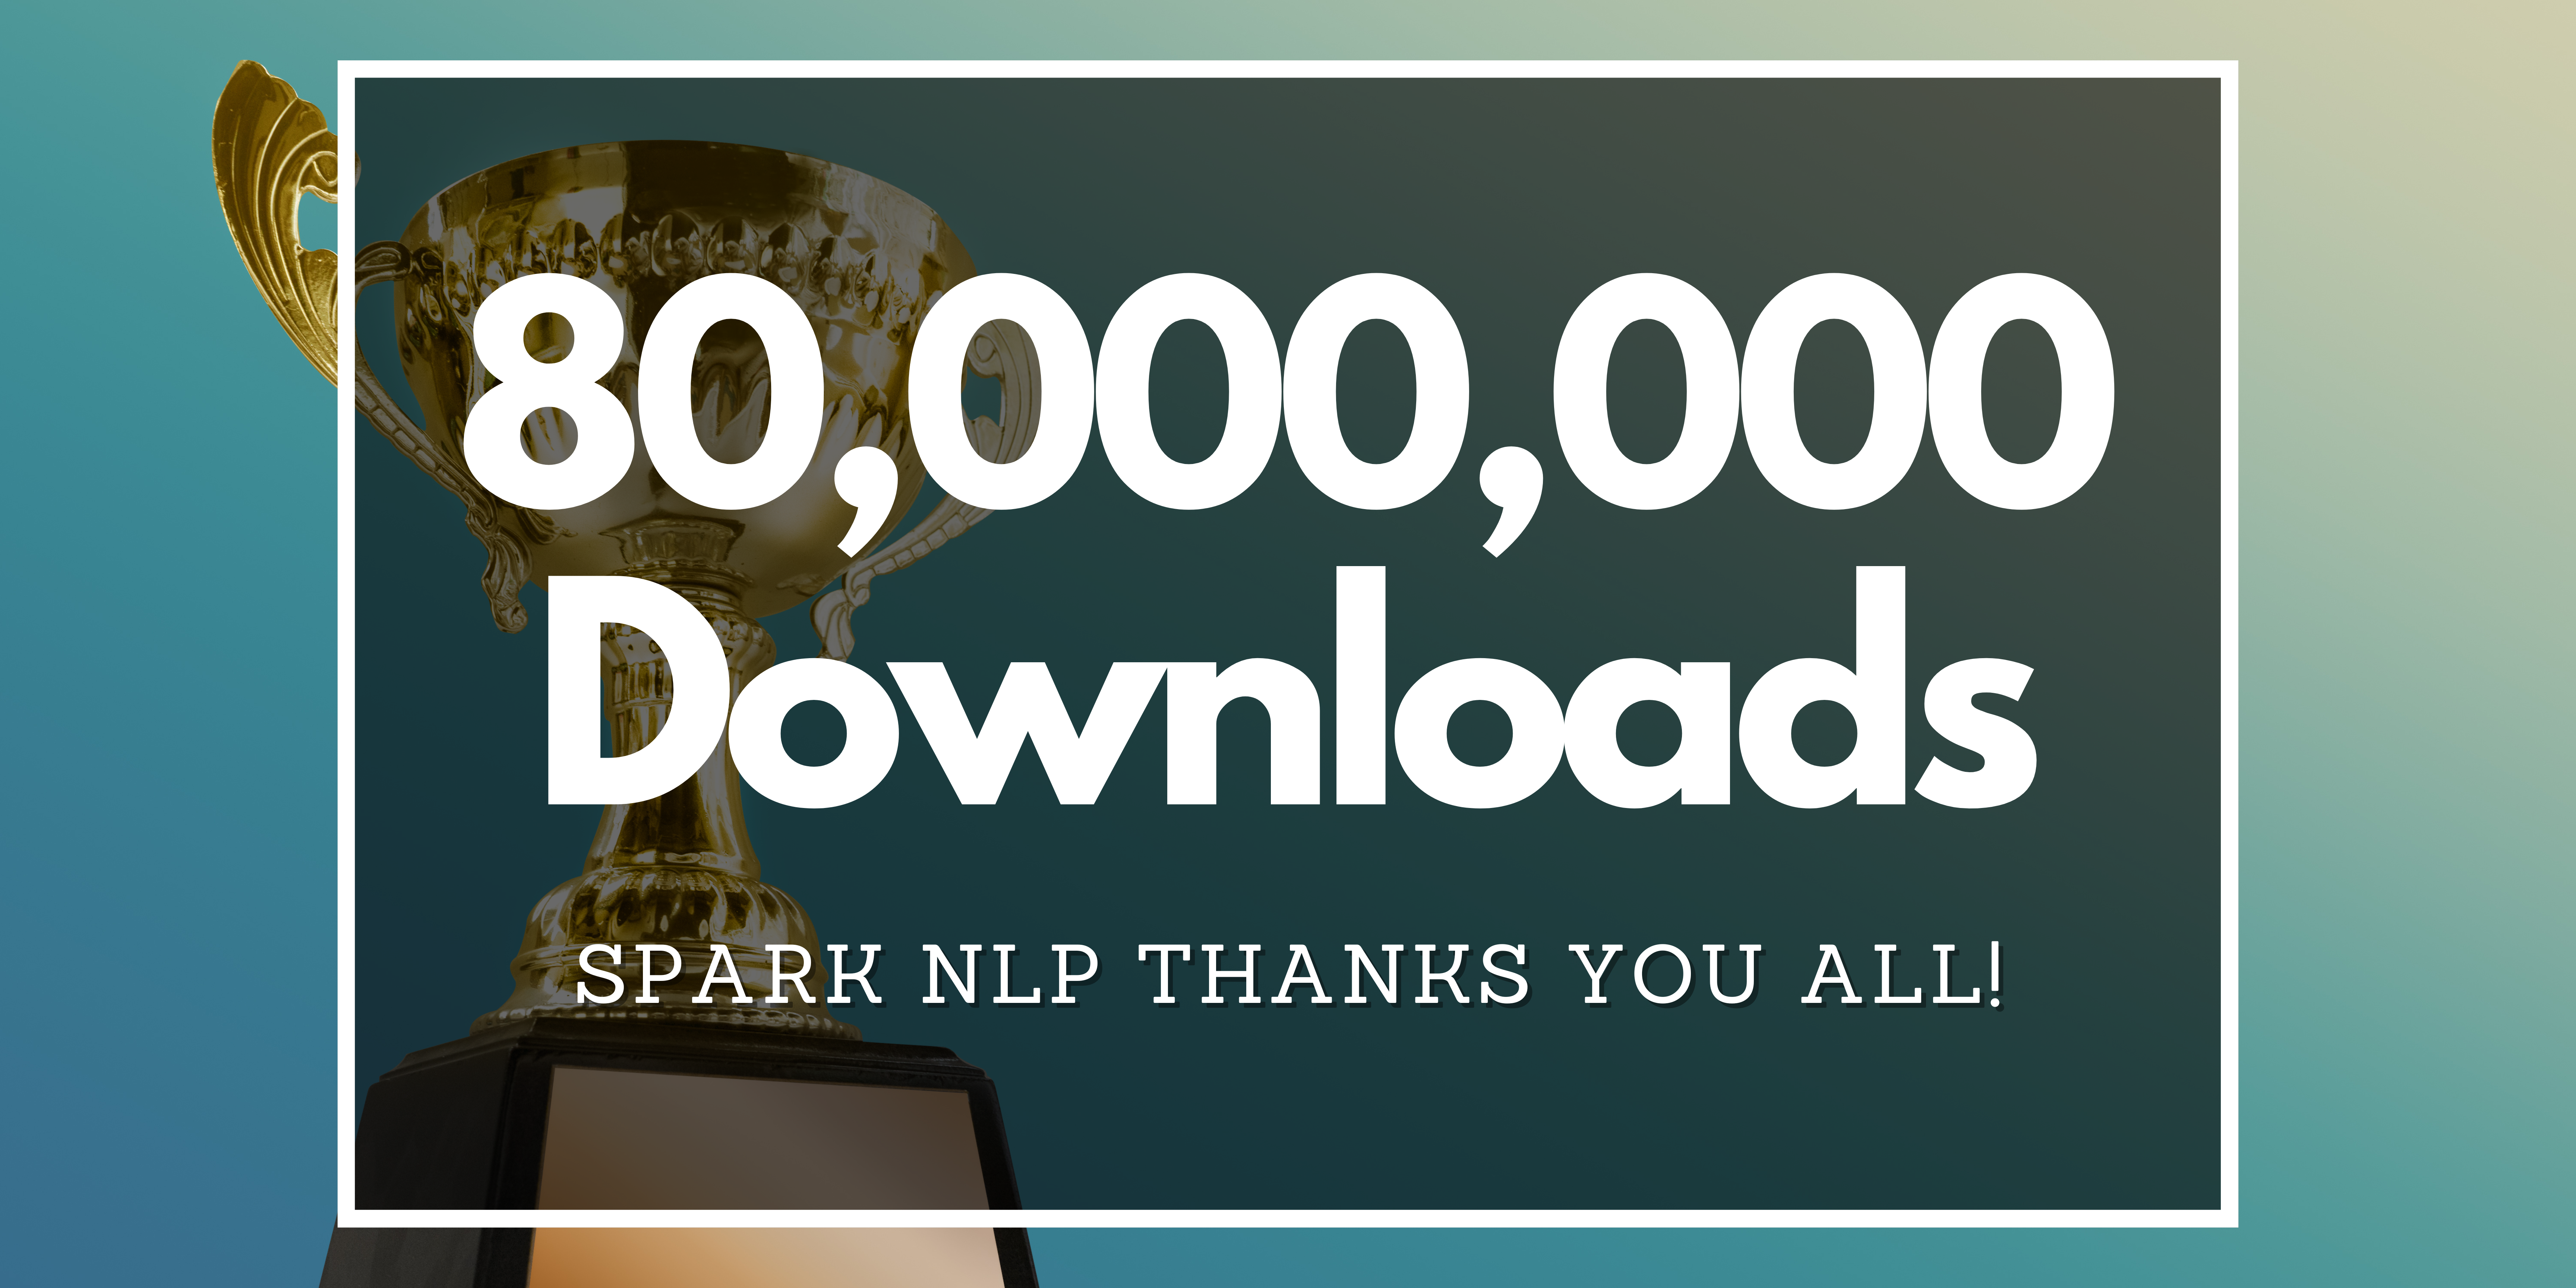 80,000,000 Downloads